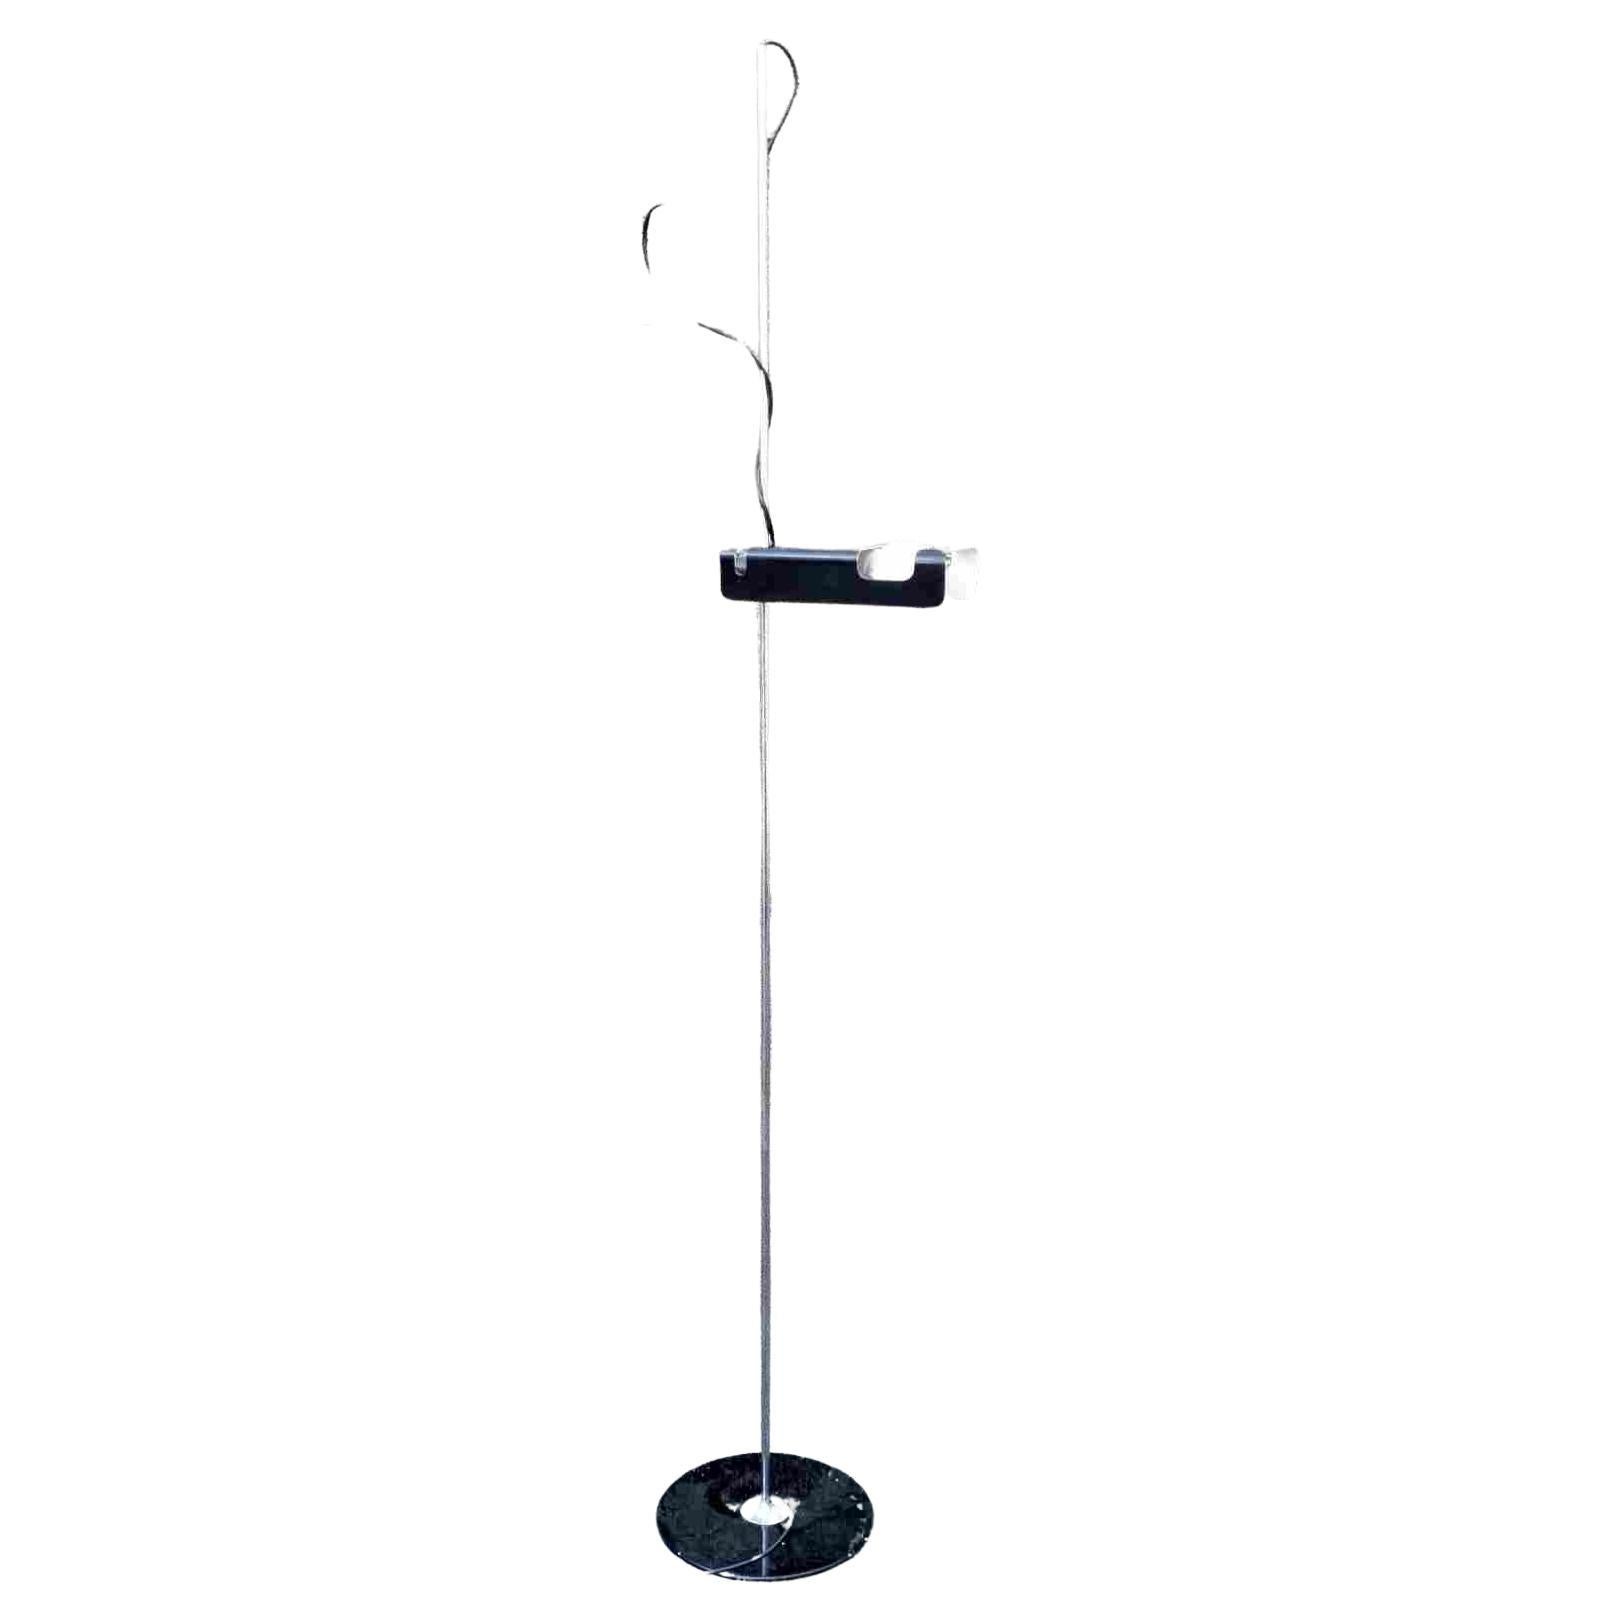 Midcentury Floor Lamp Model Spider by Joe Colombo for Oluce, Italy, 1967